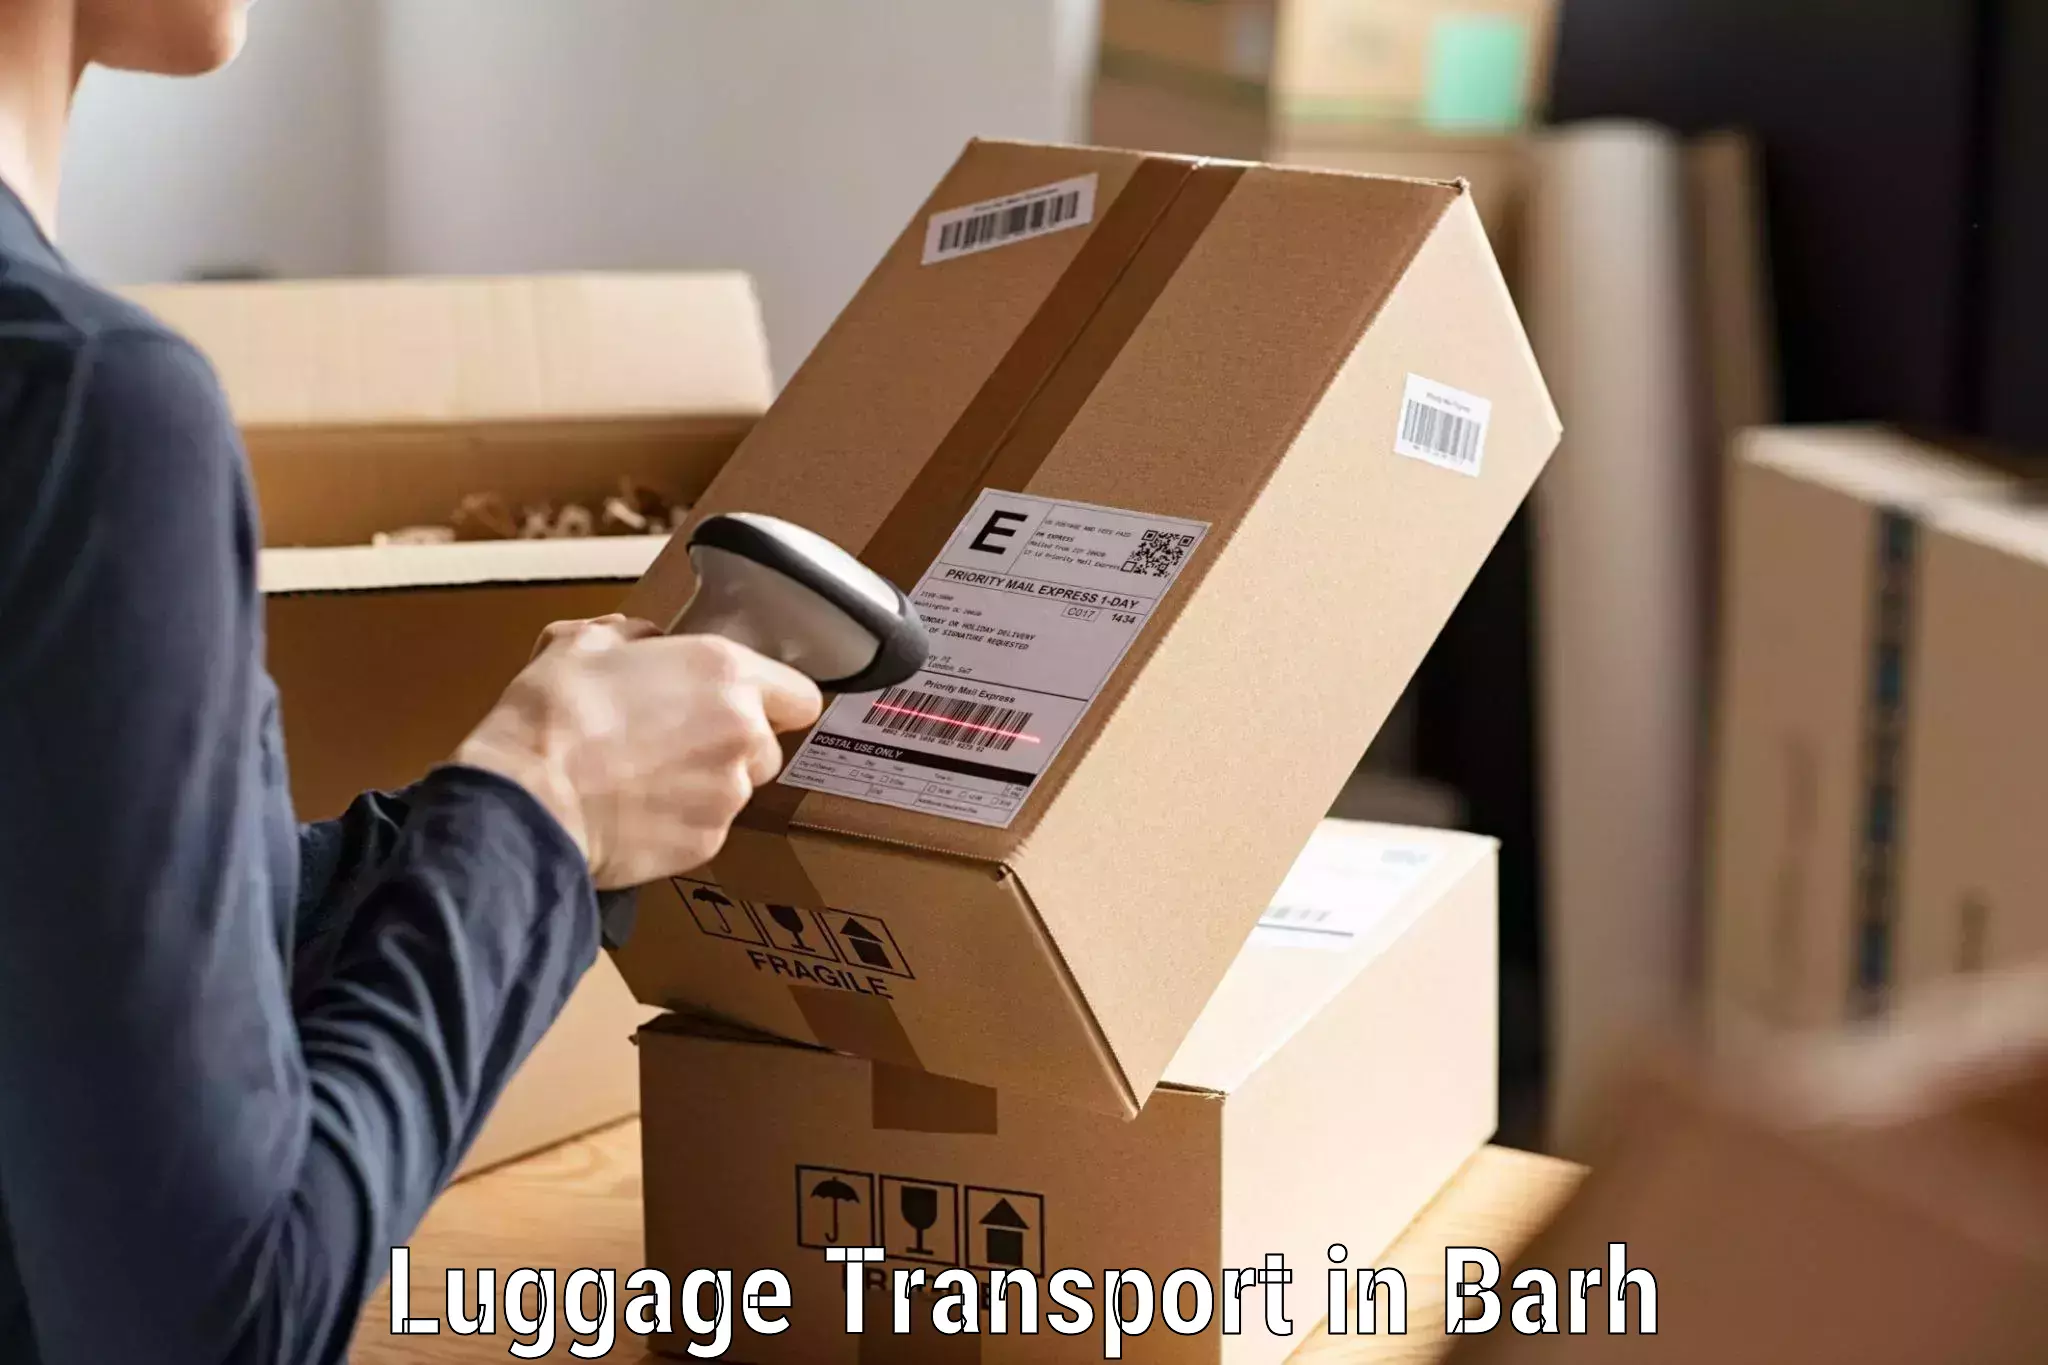 Luggage transport company in Barh